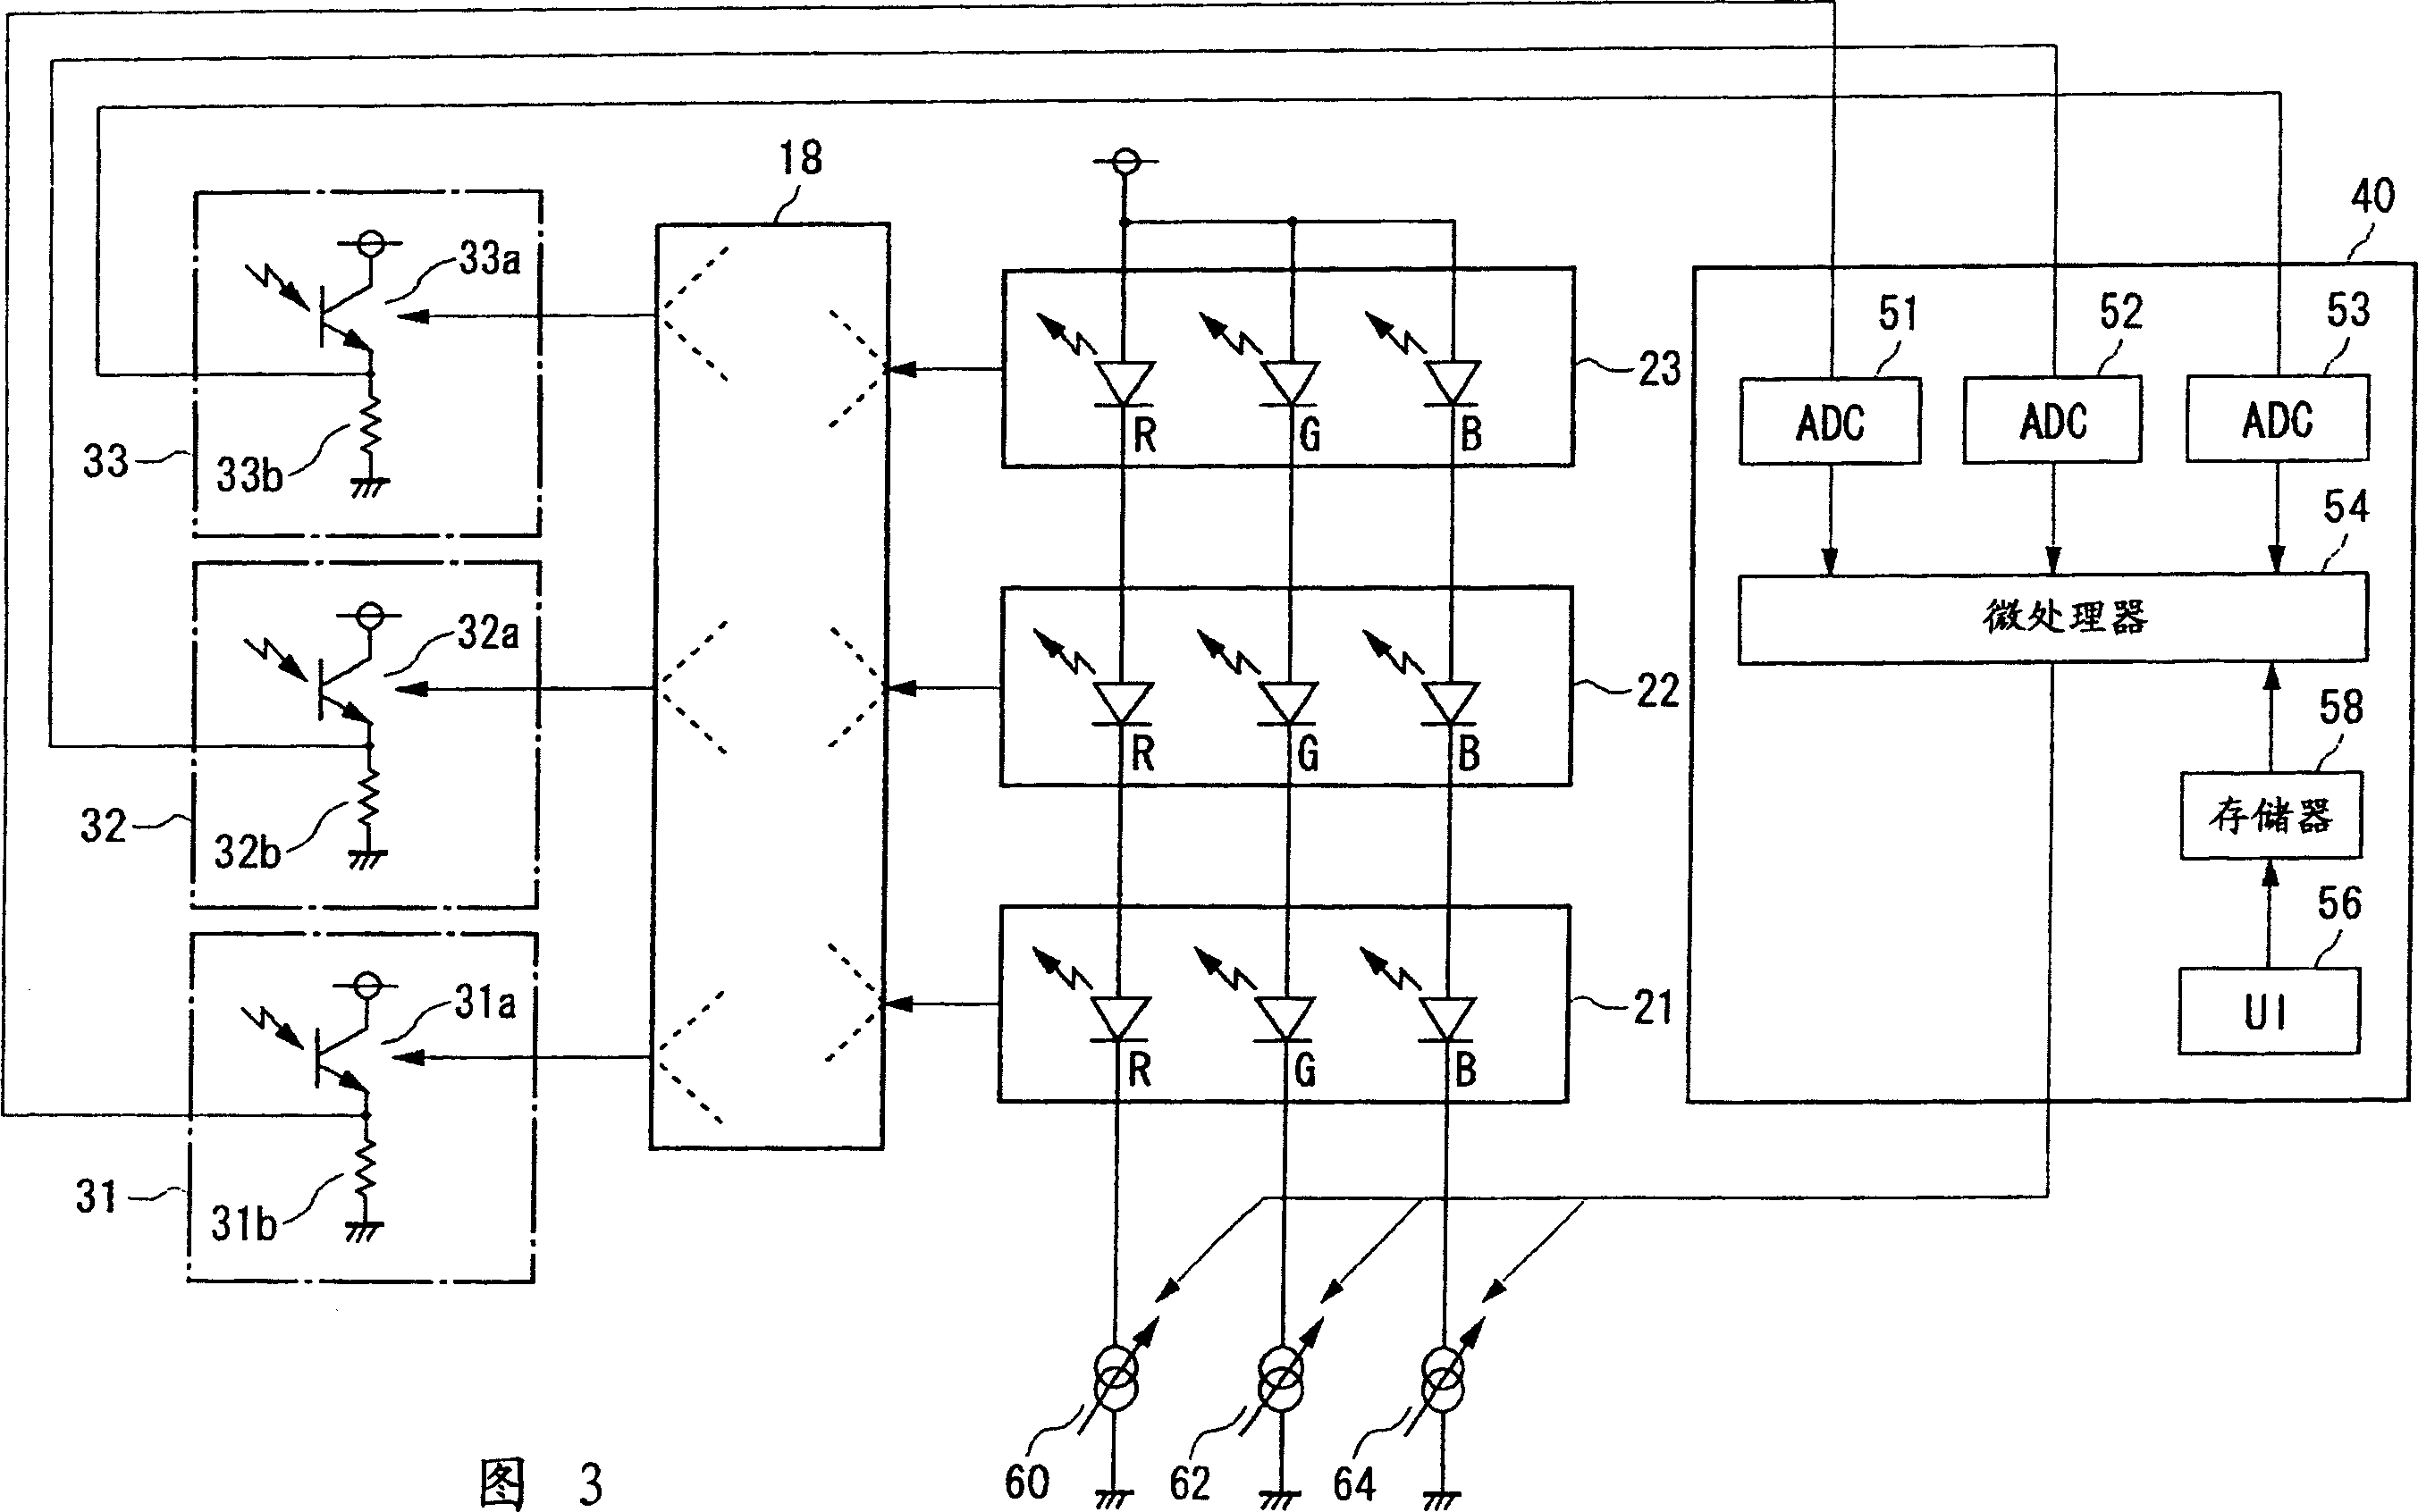 Light-emission control circuit